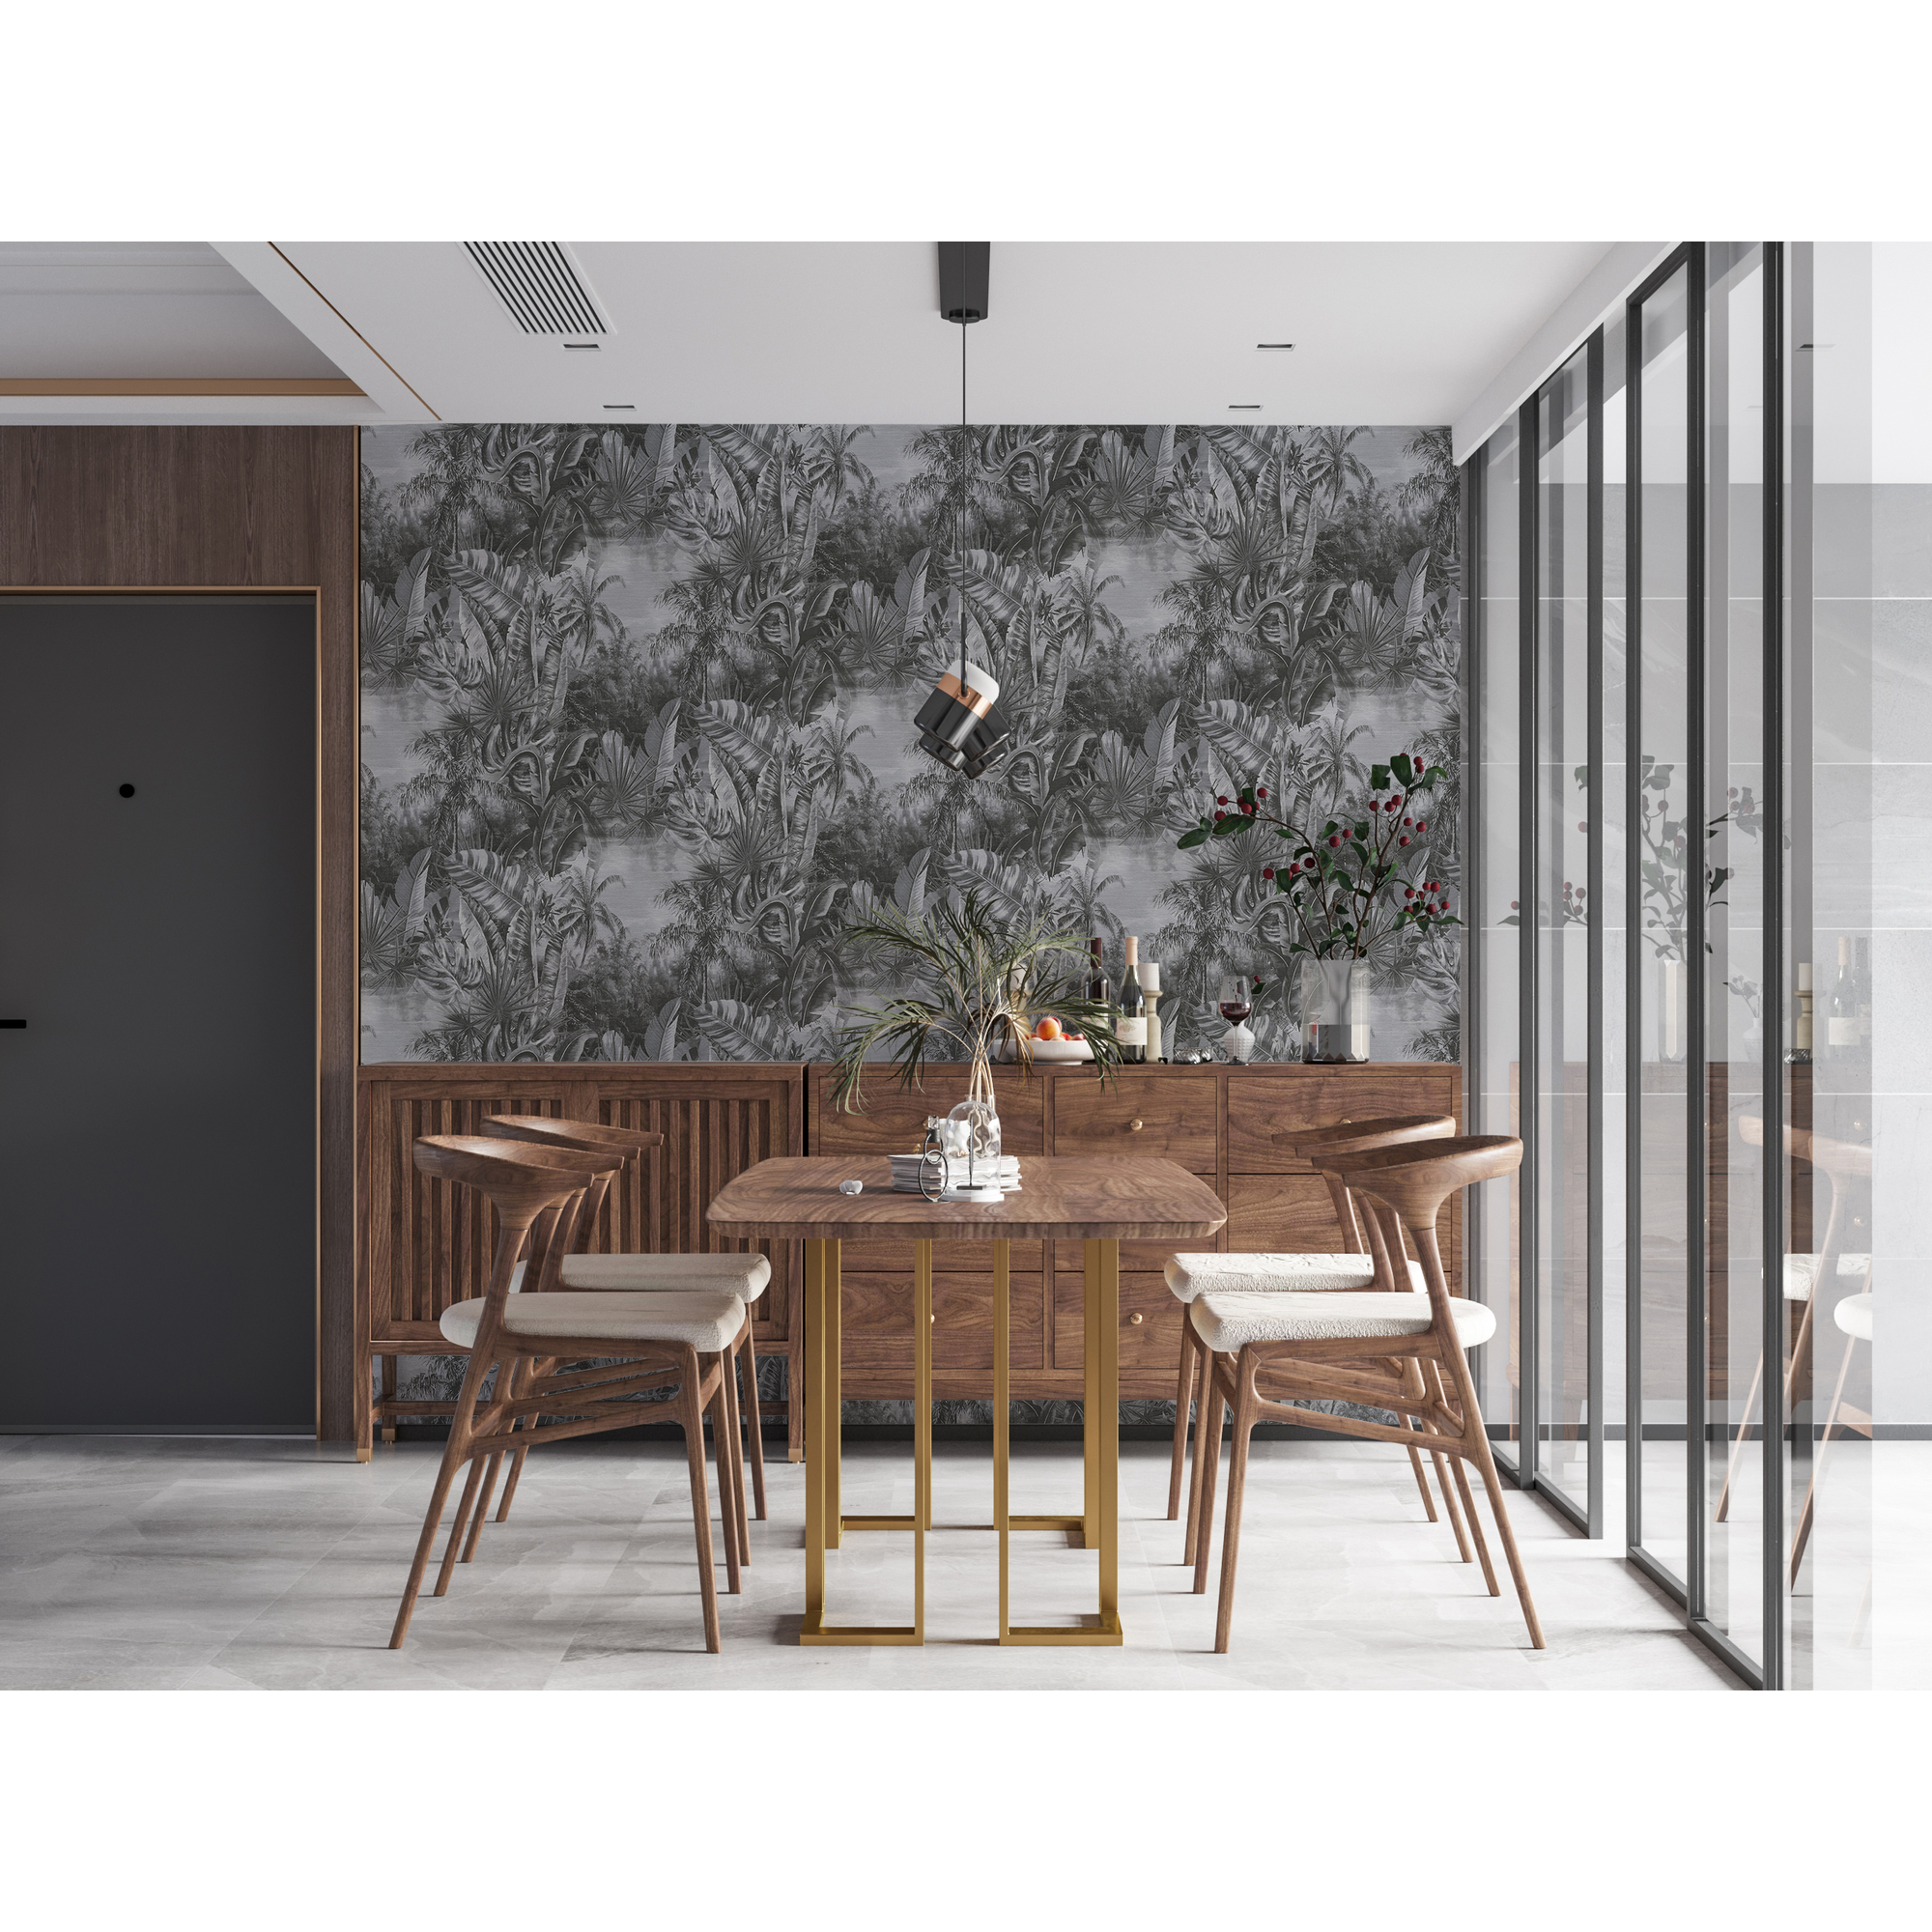 Vliestapete 'My Home. My Spa.' Dschungel grau 10,05 x 0,53 m + product picture